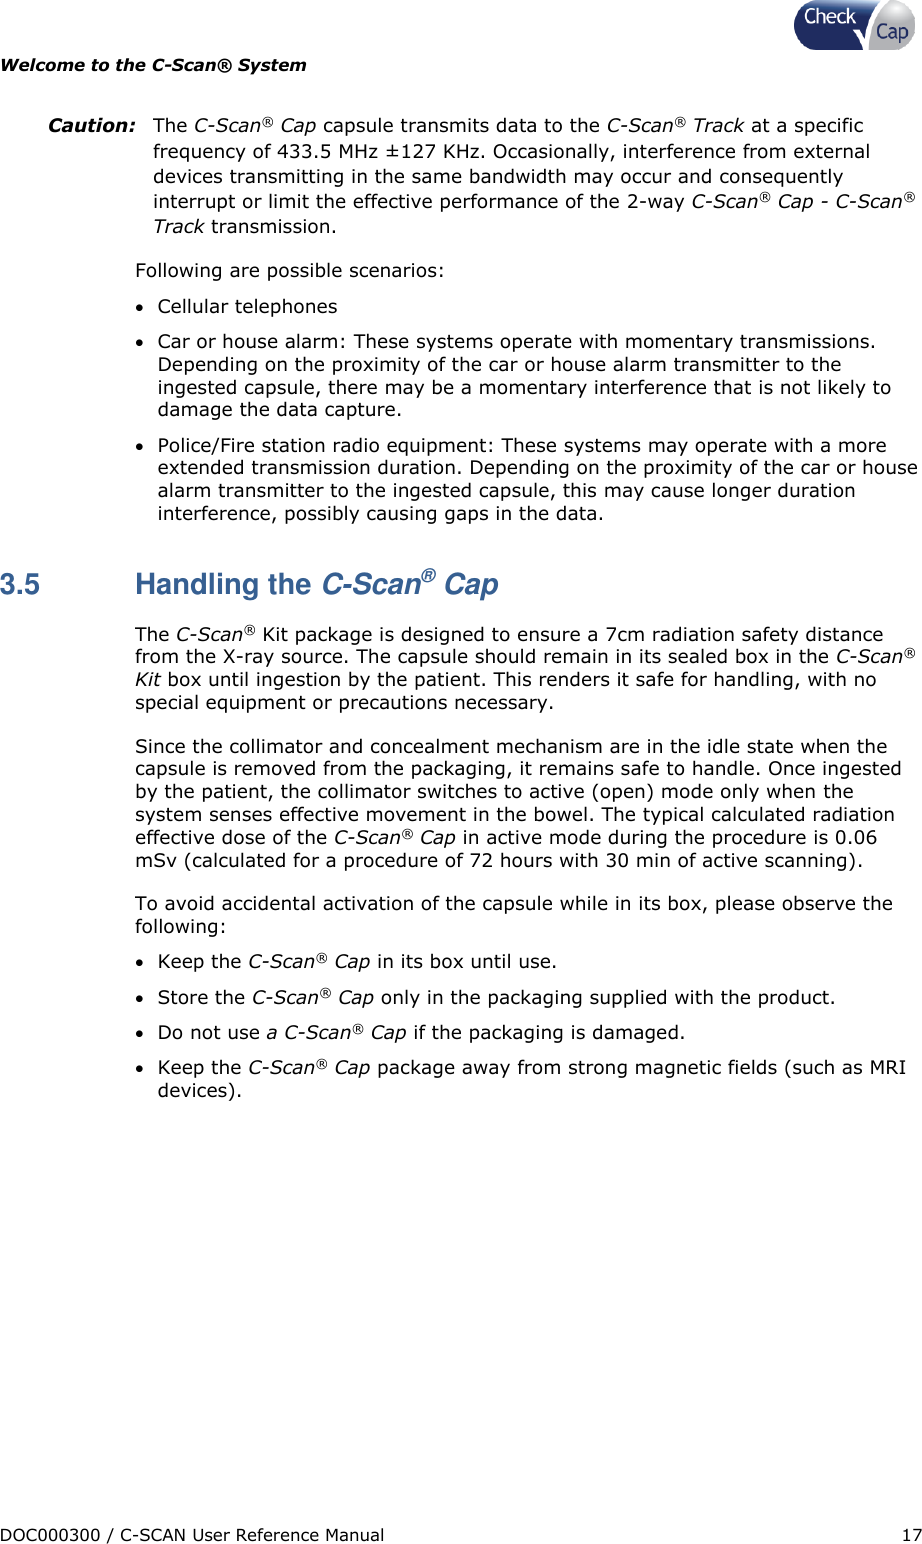 Page 17 of Check Cap CAP10007506 C-Scan Cap transceiver User Manual Title